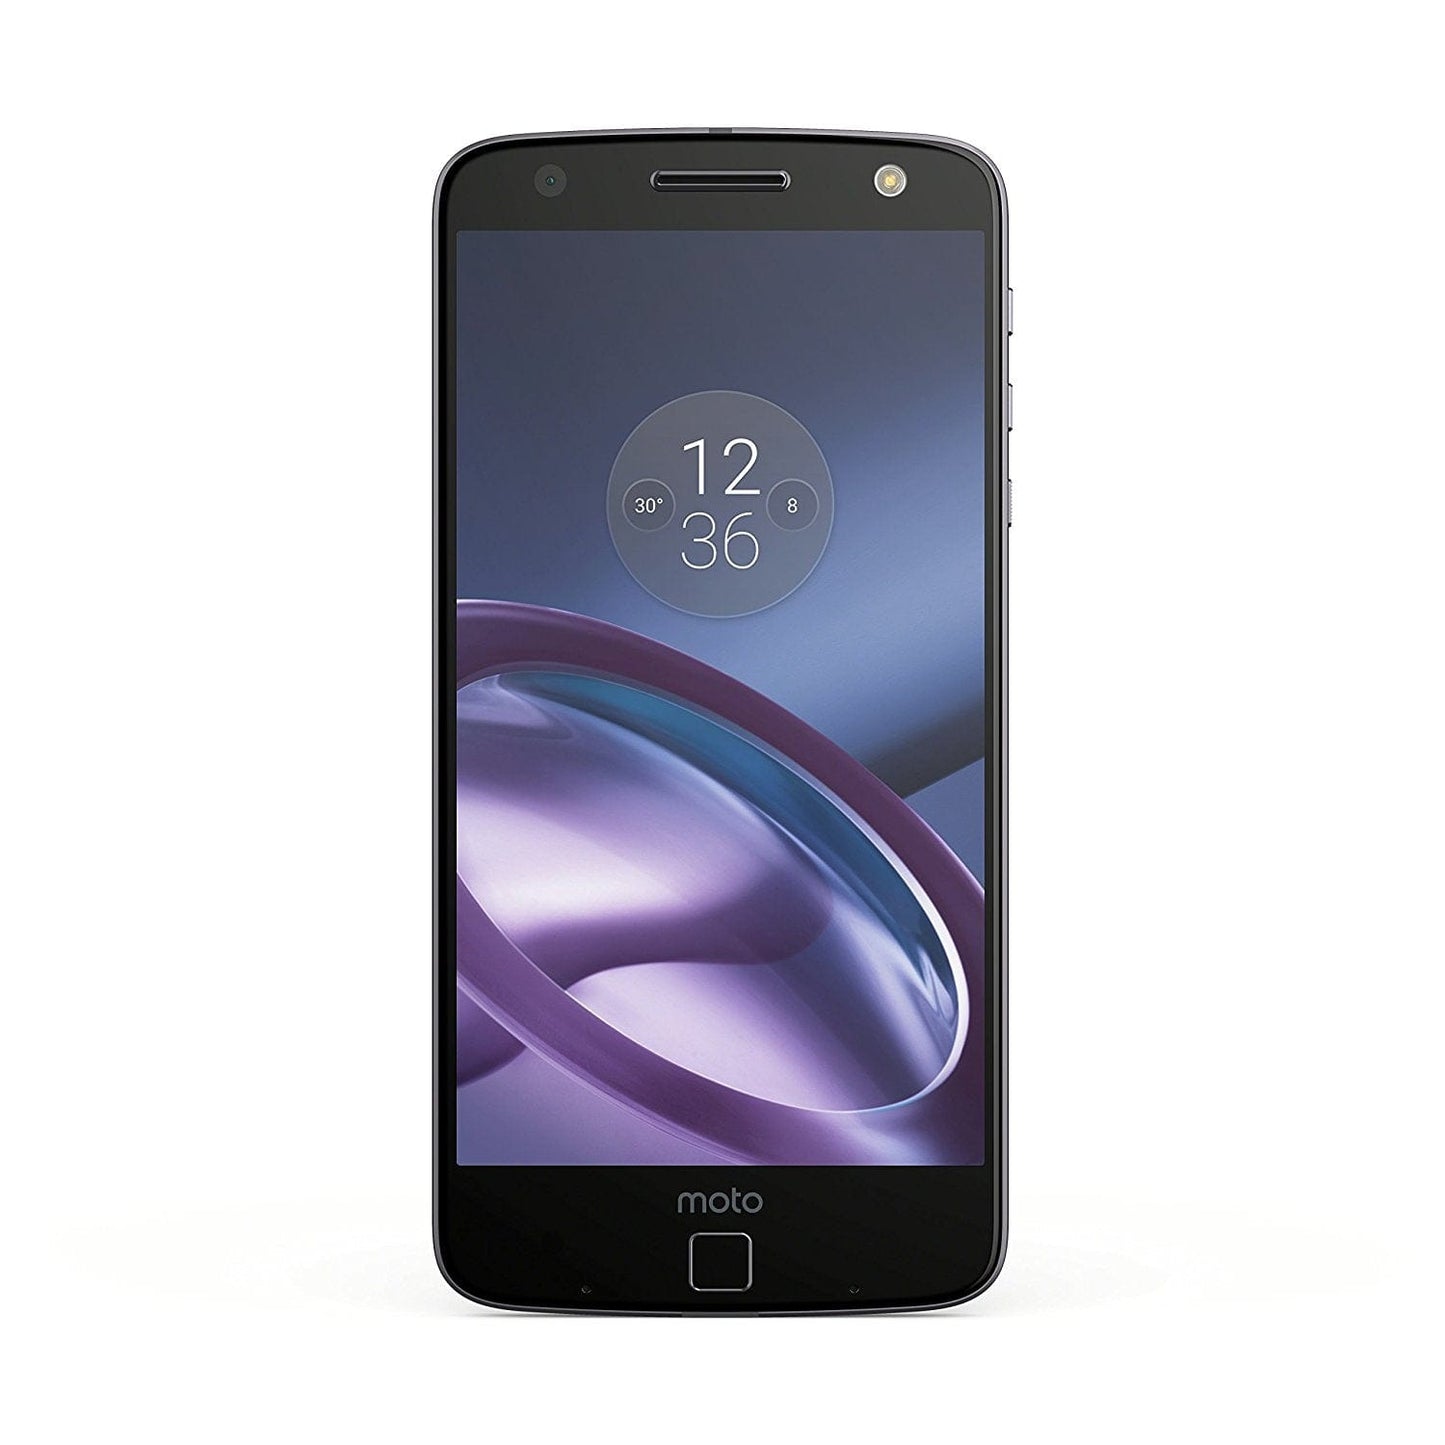 Moto Z Unlocked SmartCell-Phone, 5.5" Quad HD screen, 64GB storage